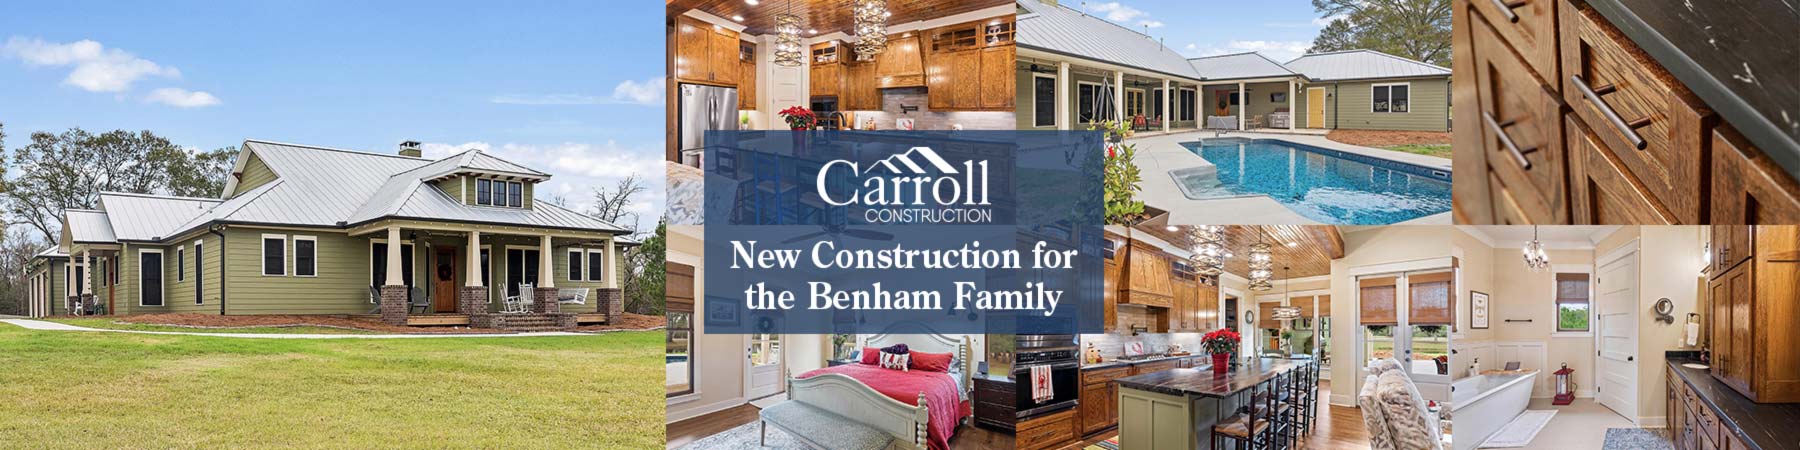 New Home Construction for the Benham Family